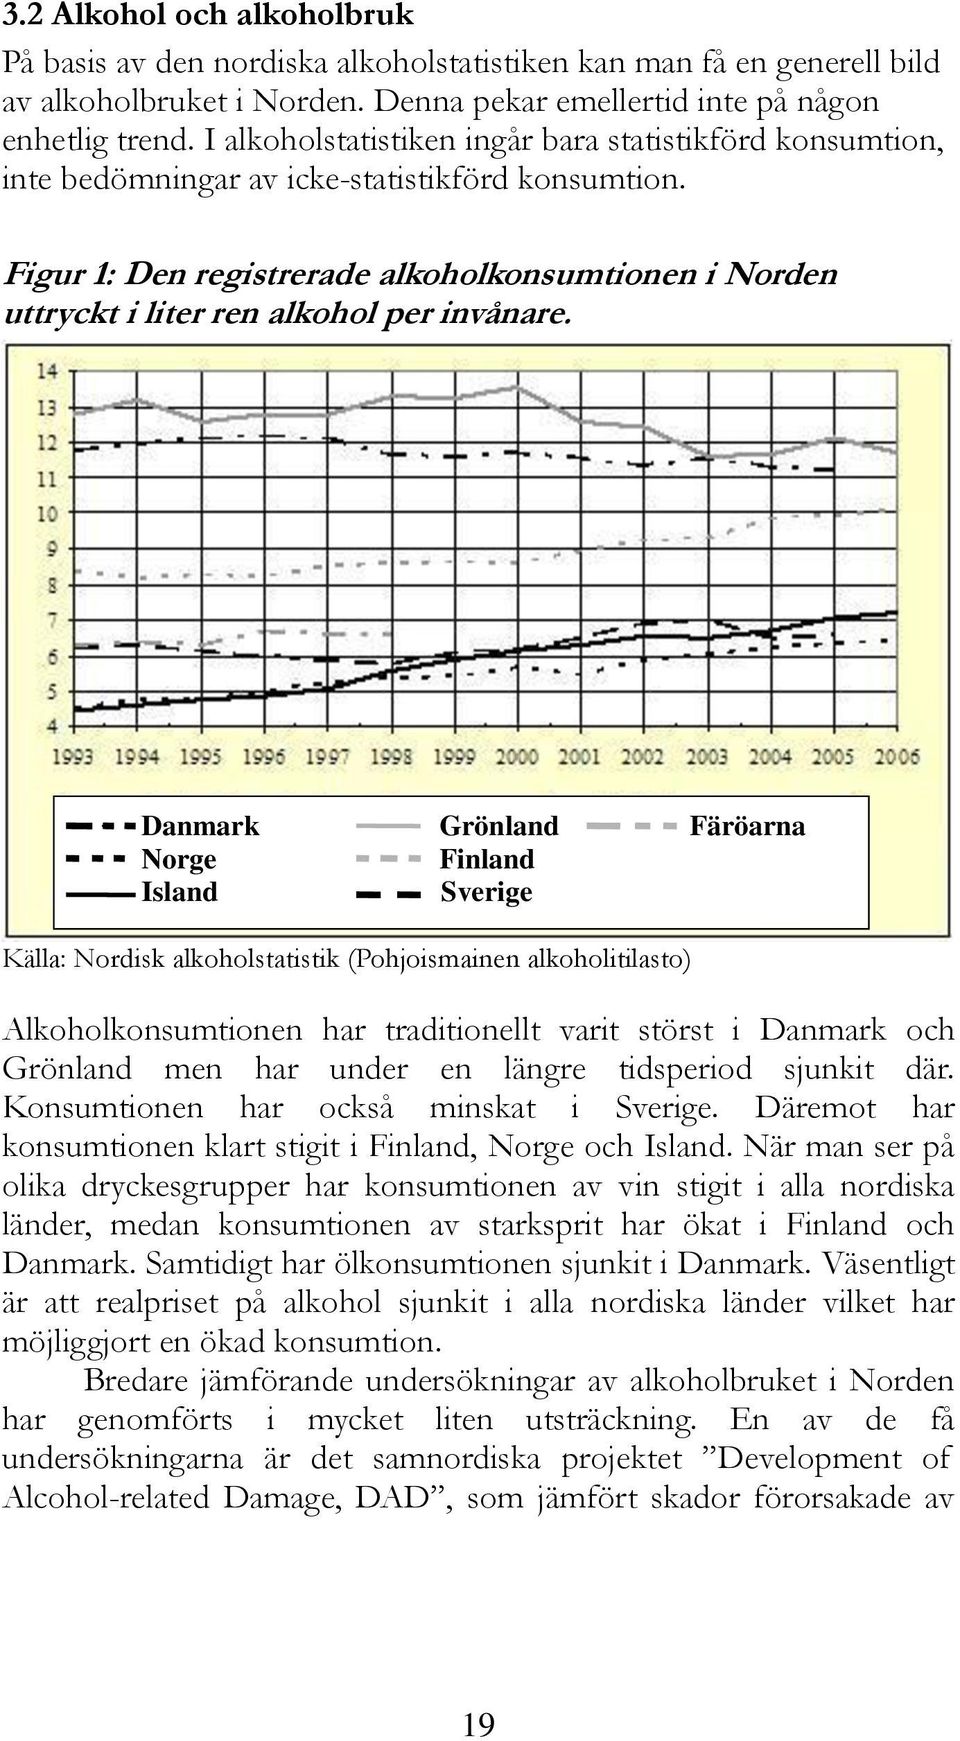 Figur 1: Den registrerade alkoholkonsumtionen i Norden uttryckt i liter ren alkohol per invånare.